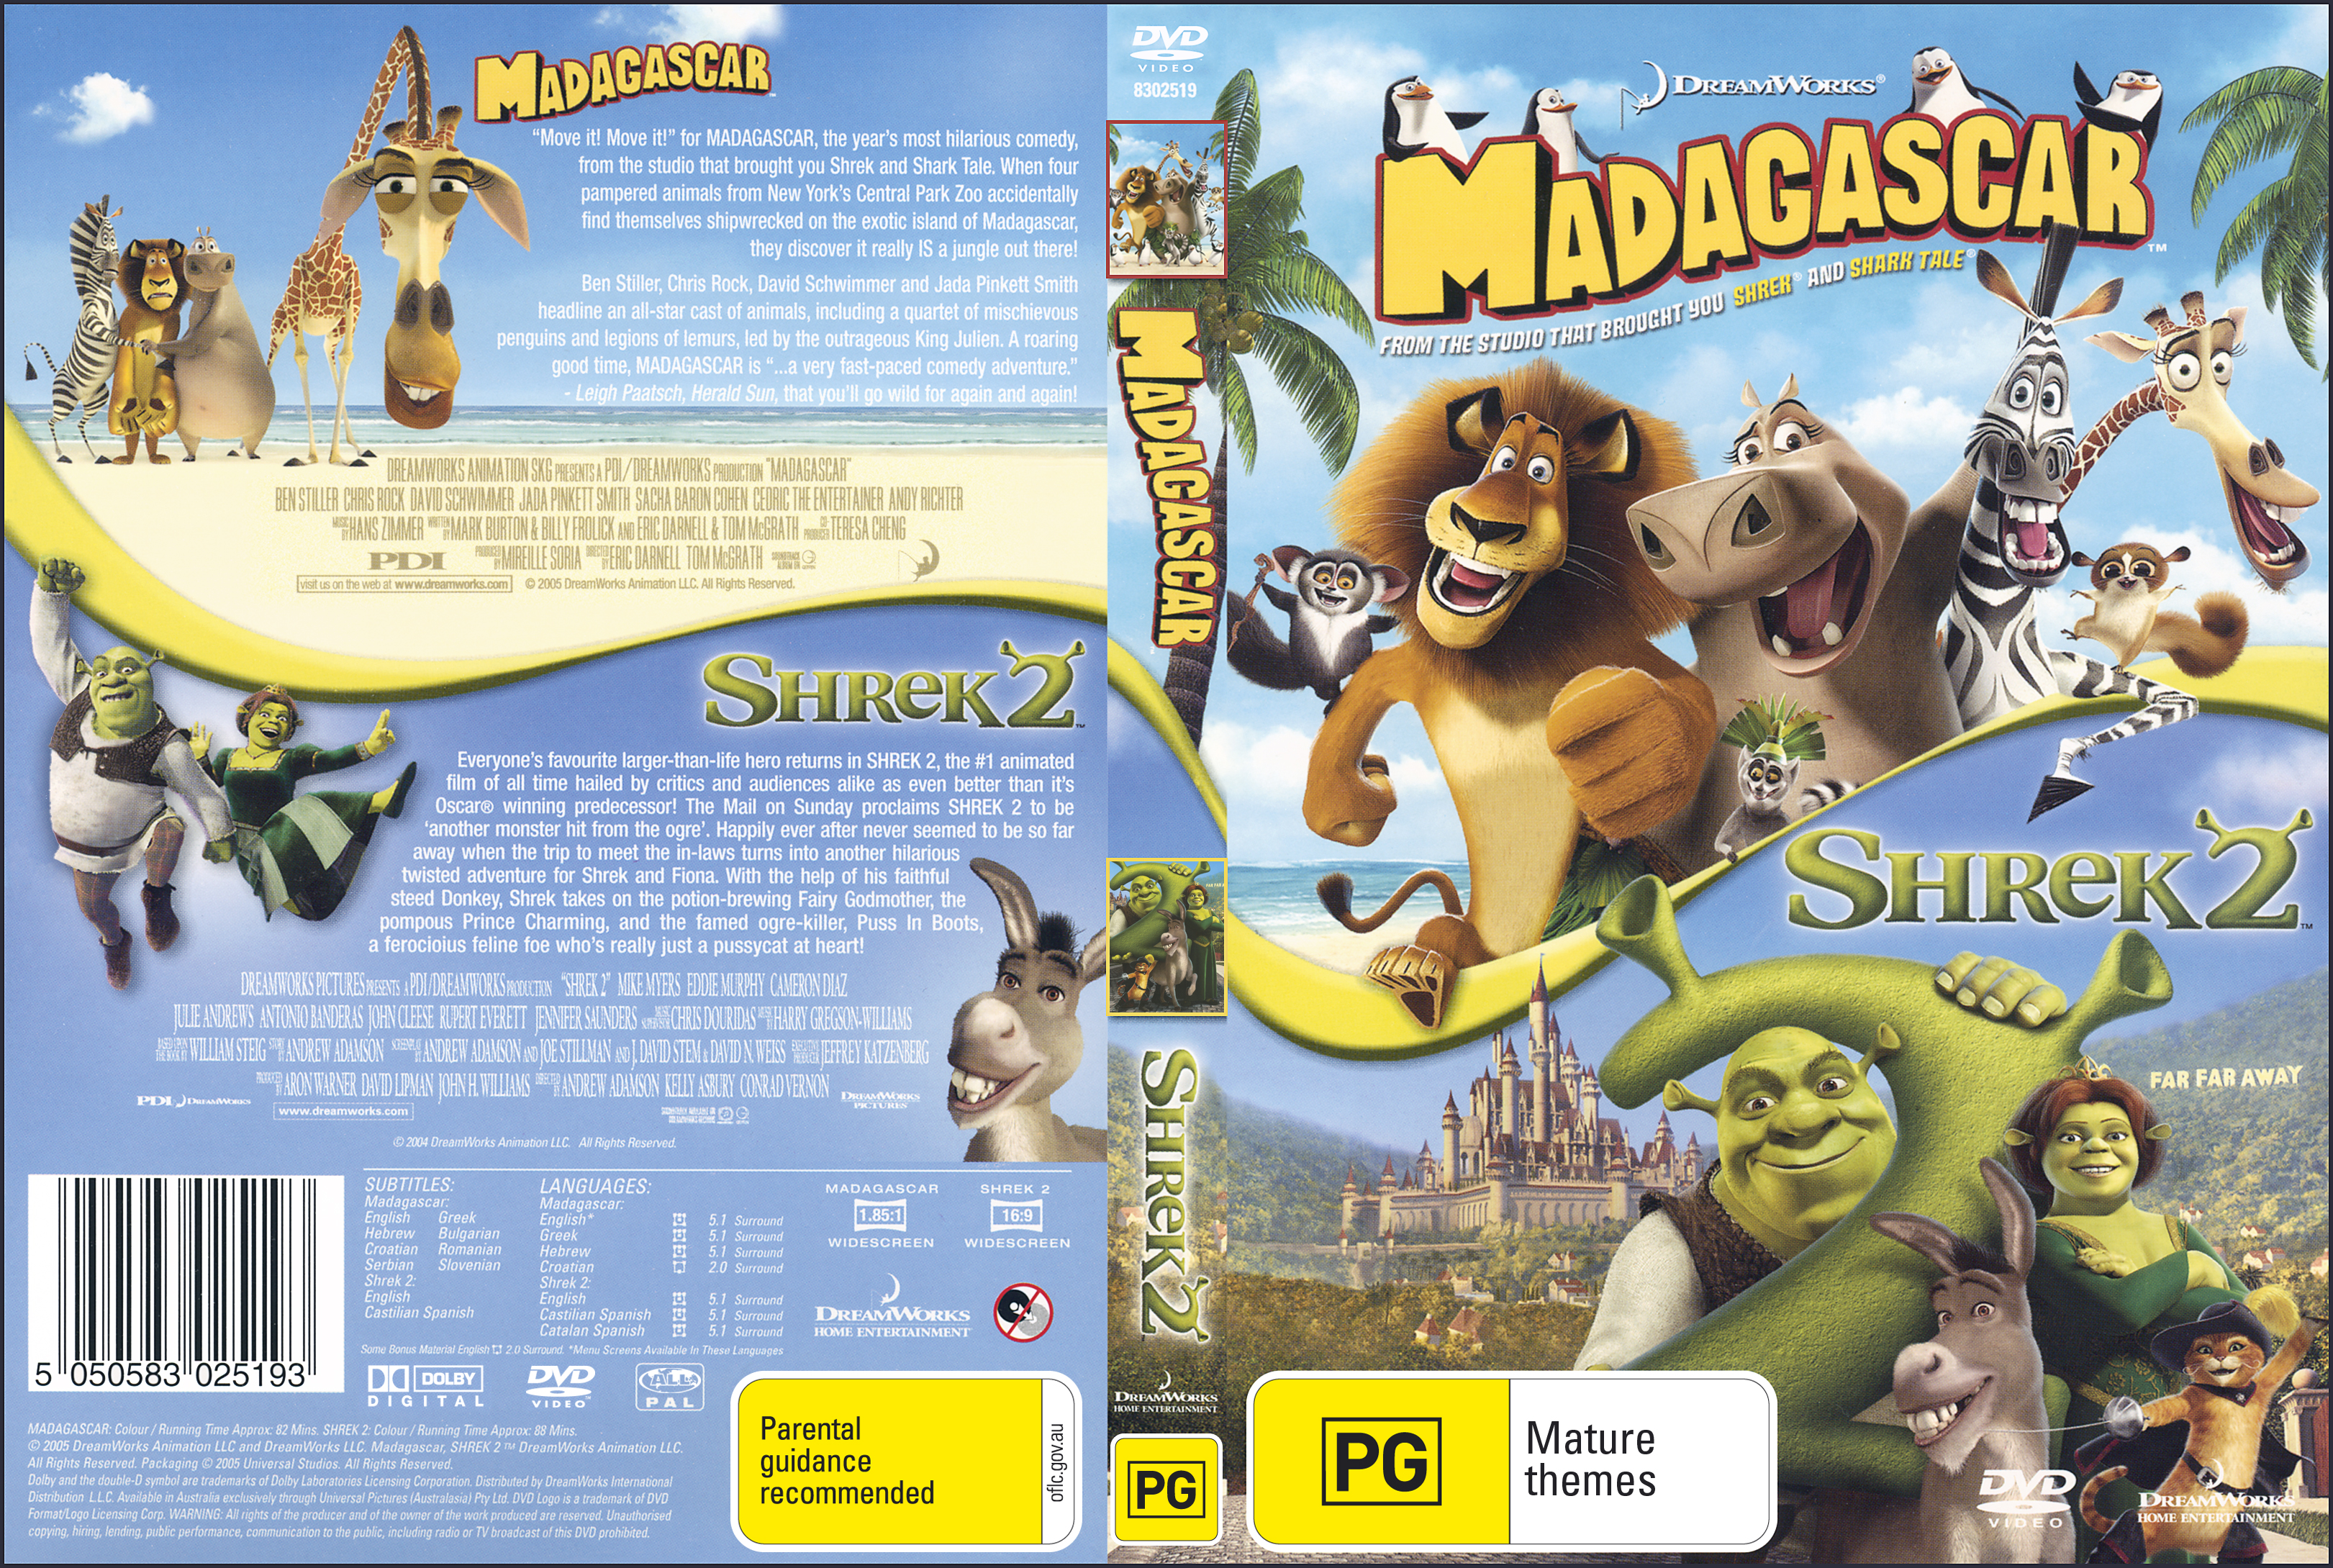 Madagascar Shrek 2 Dvd Covers Cover Century Over 500 000 Album Art Covers For Free